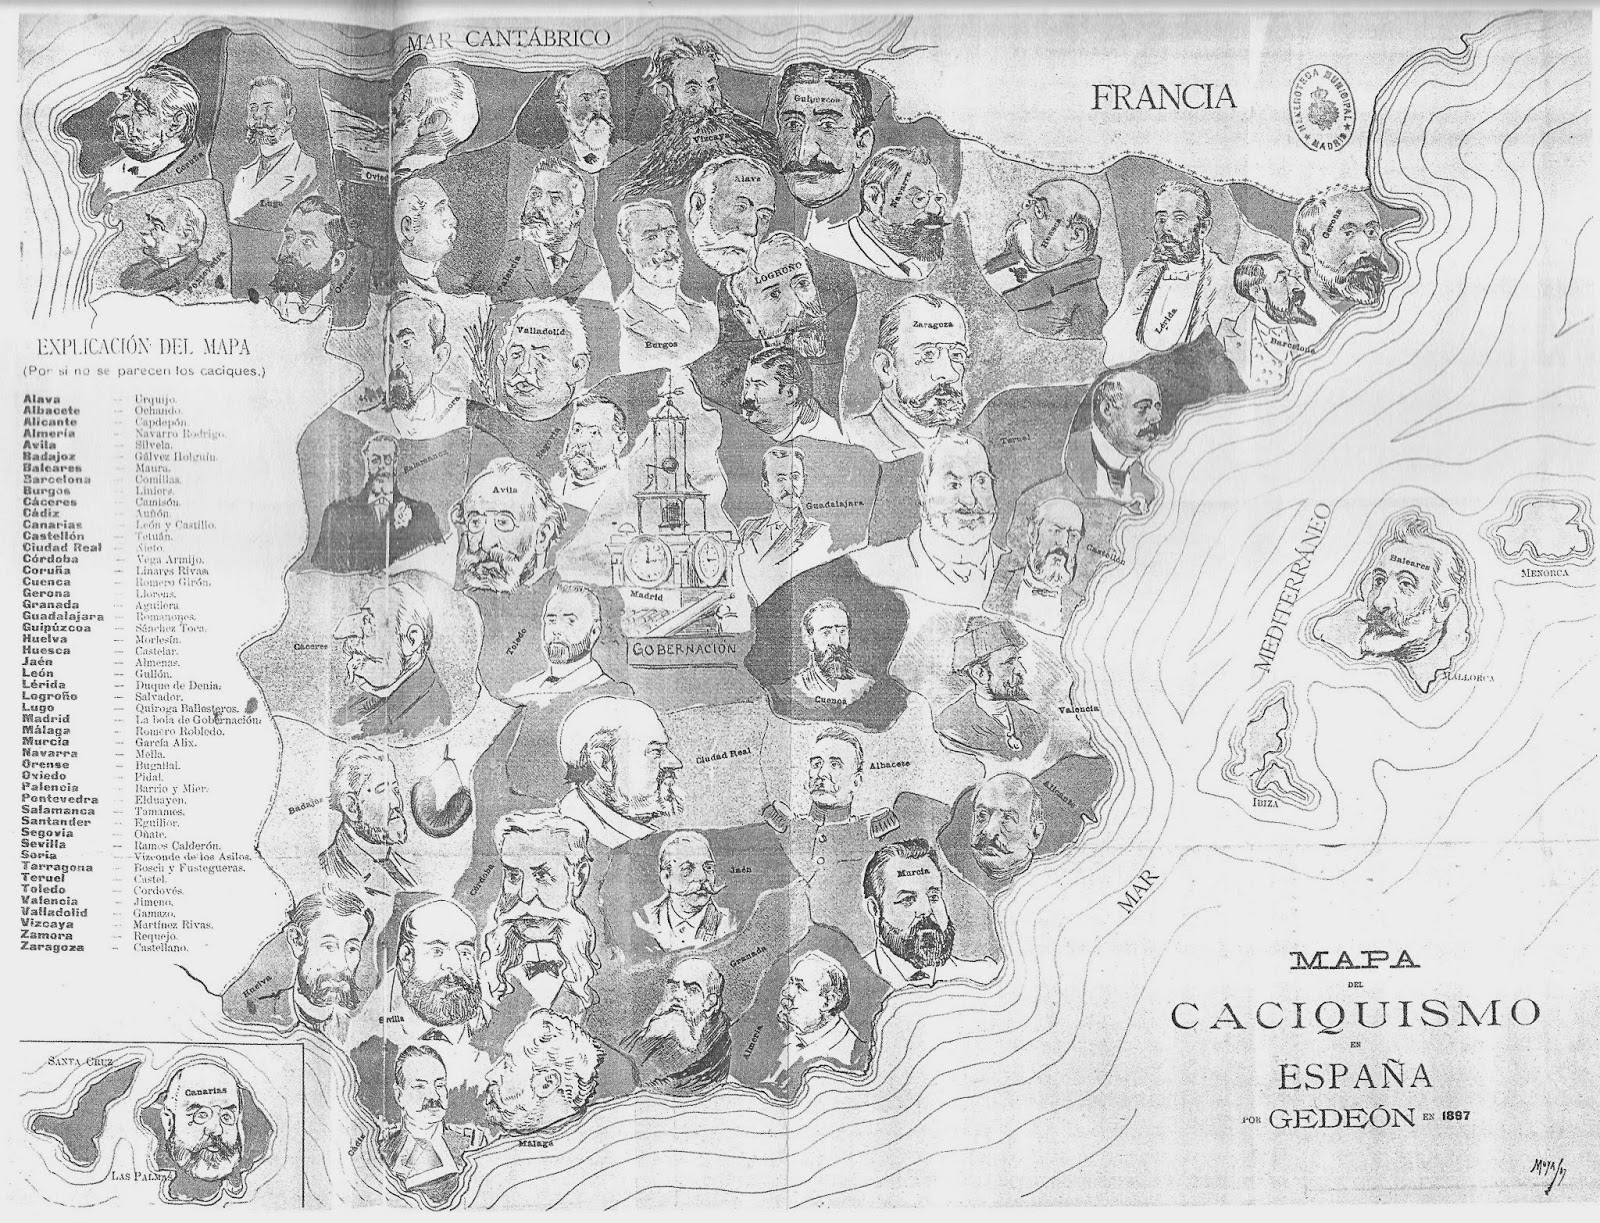 Mapa del caciquismo español